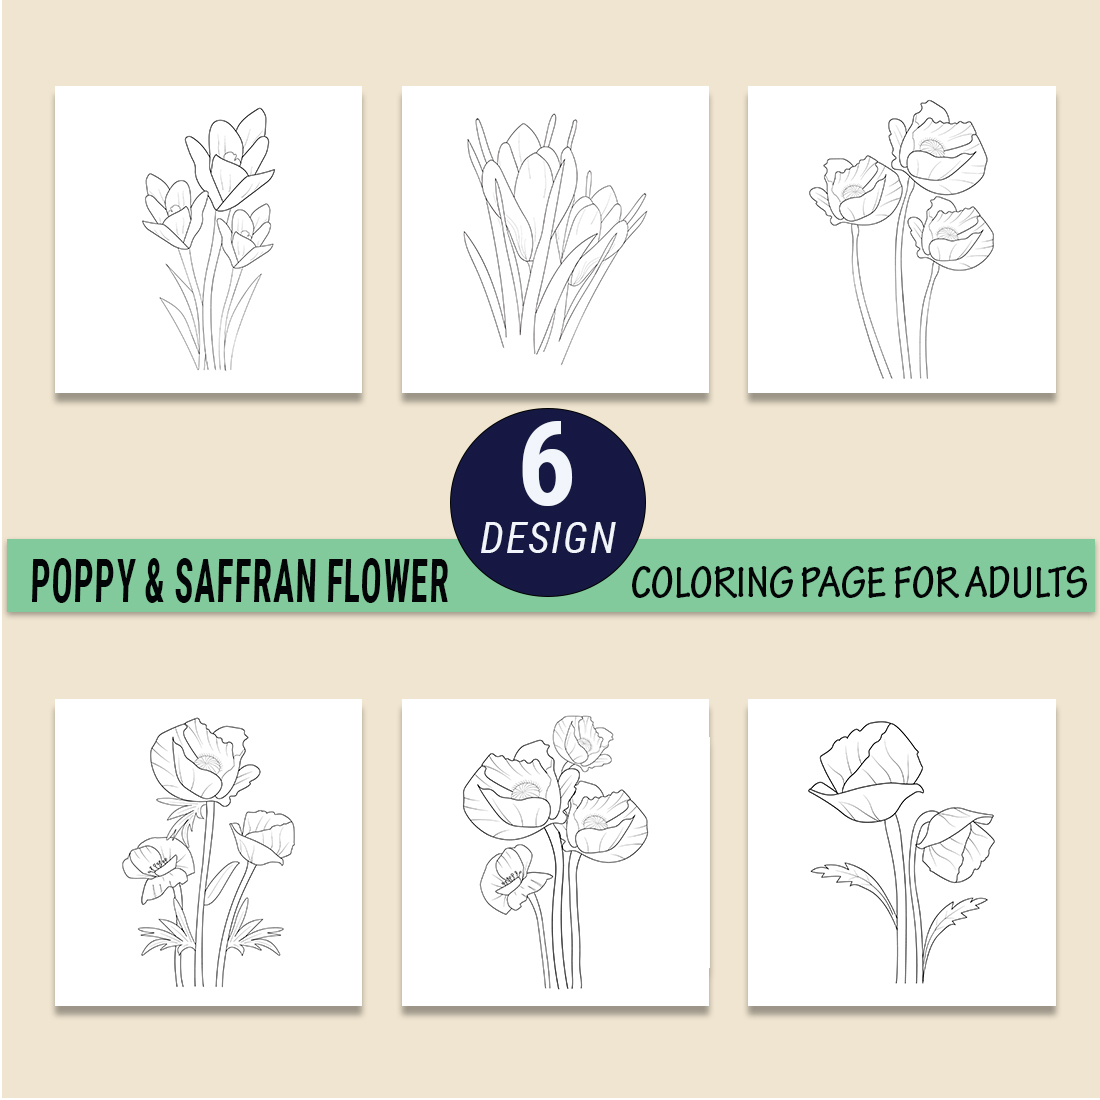 California poppy drawing, crocus flower coloring page, saffron flower vector art crocus flower illustration, cover image.